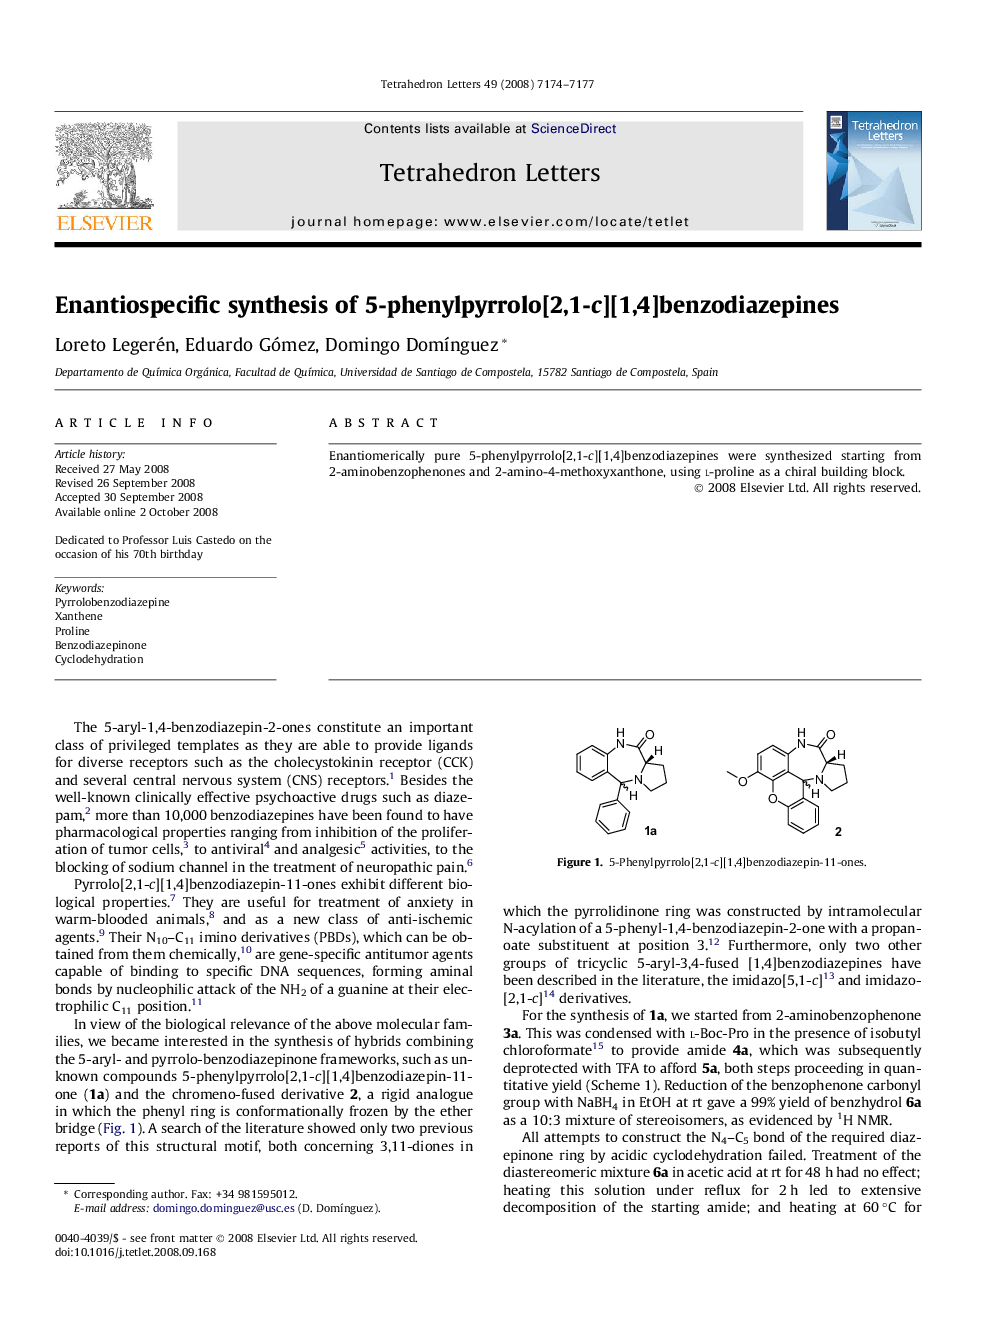 Enantiospecific synthesis of 5-phenylpyrrolo[2,1-c][1,4]benzodiazepines